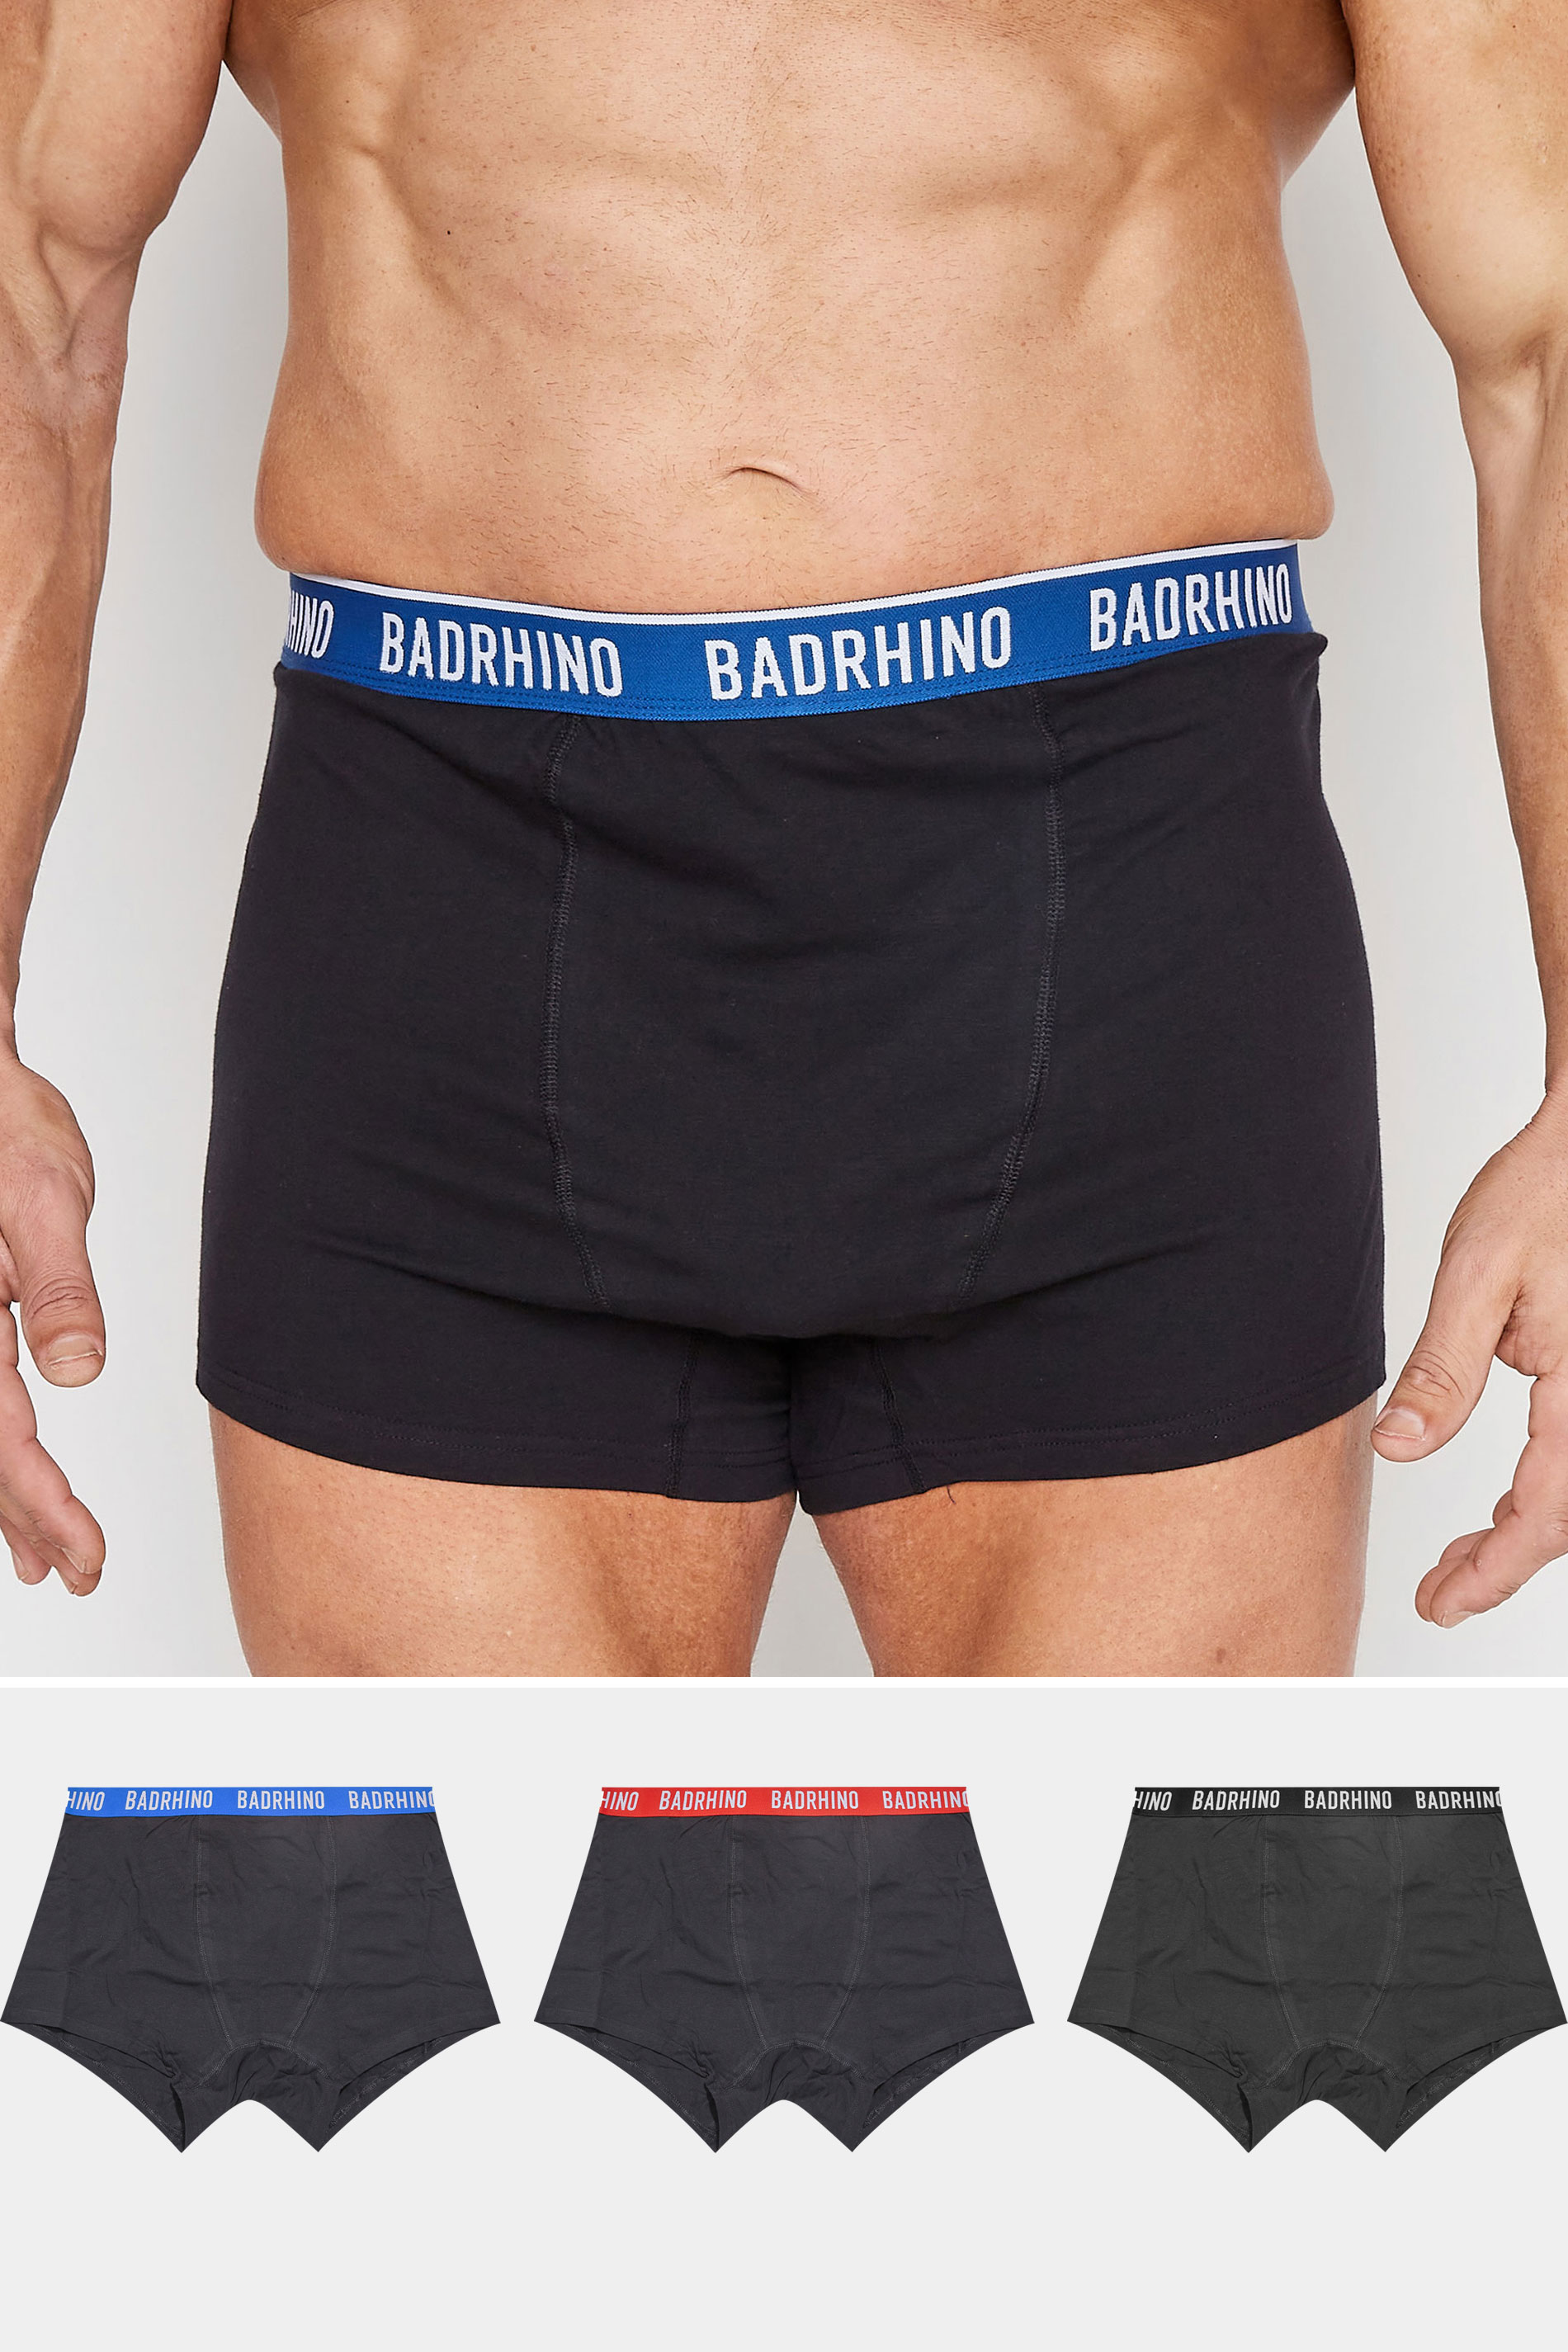 BadRhino Big & Tall 3 PACK Black Multicolour Waist Boxers 1